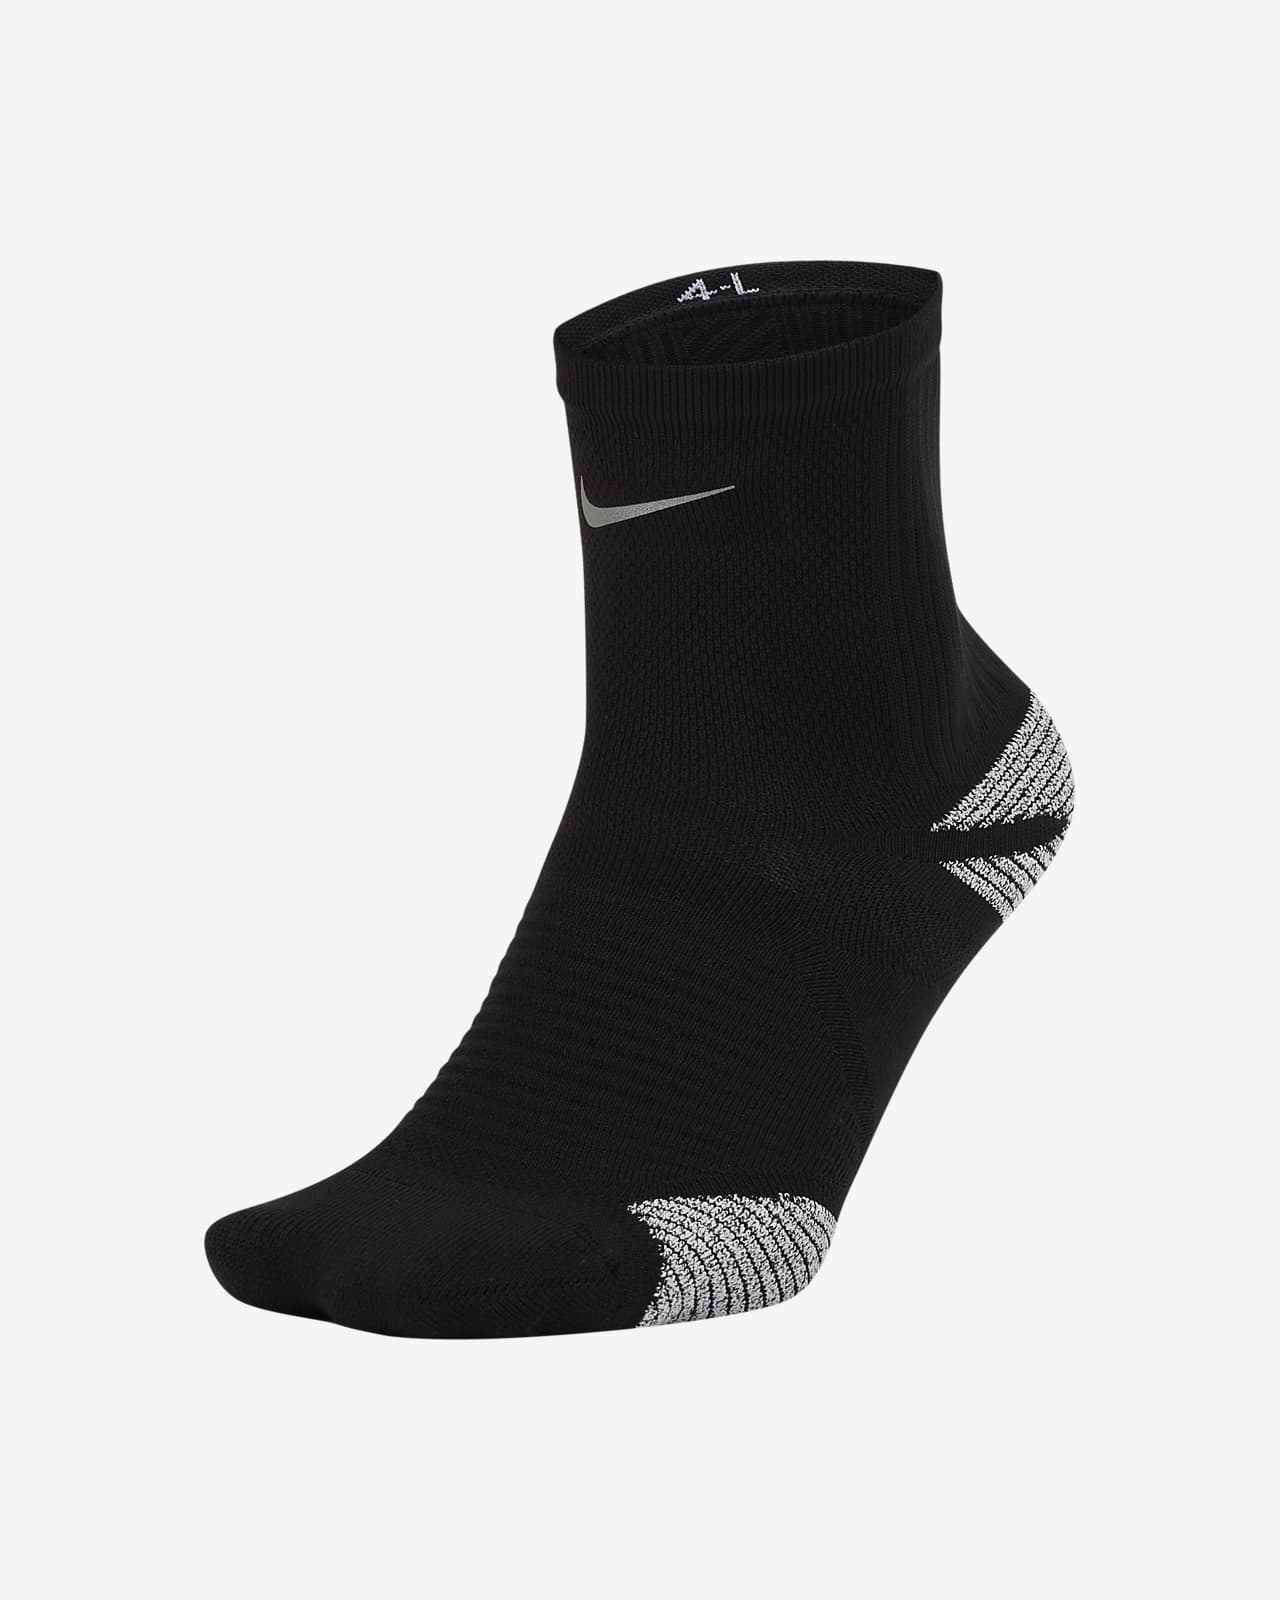 nike black ankle socks